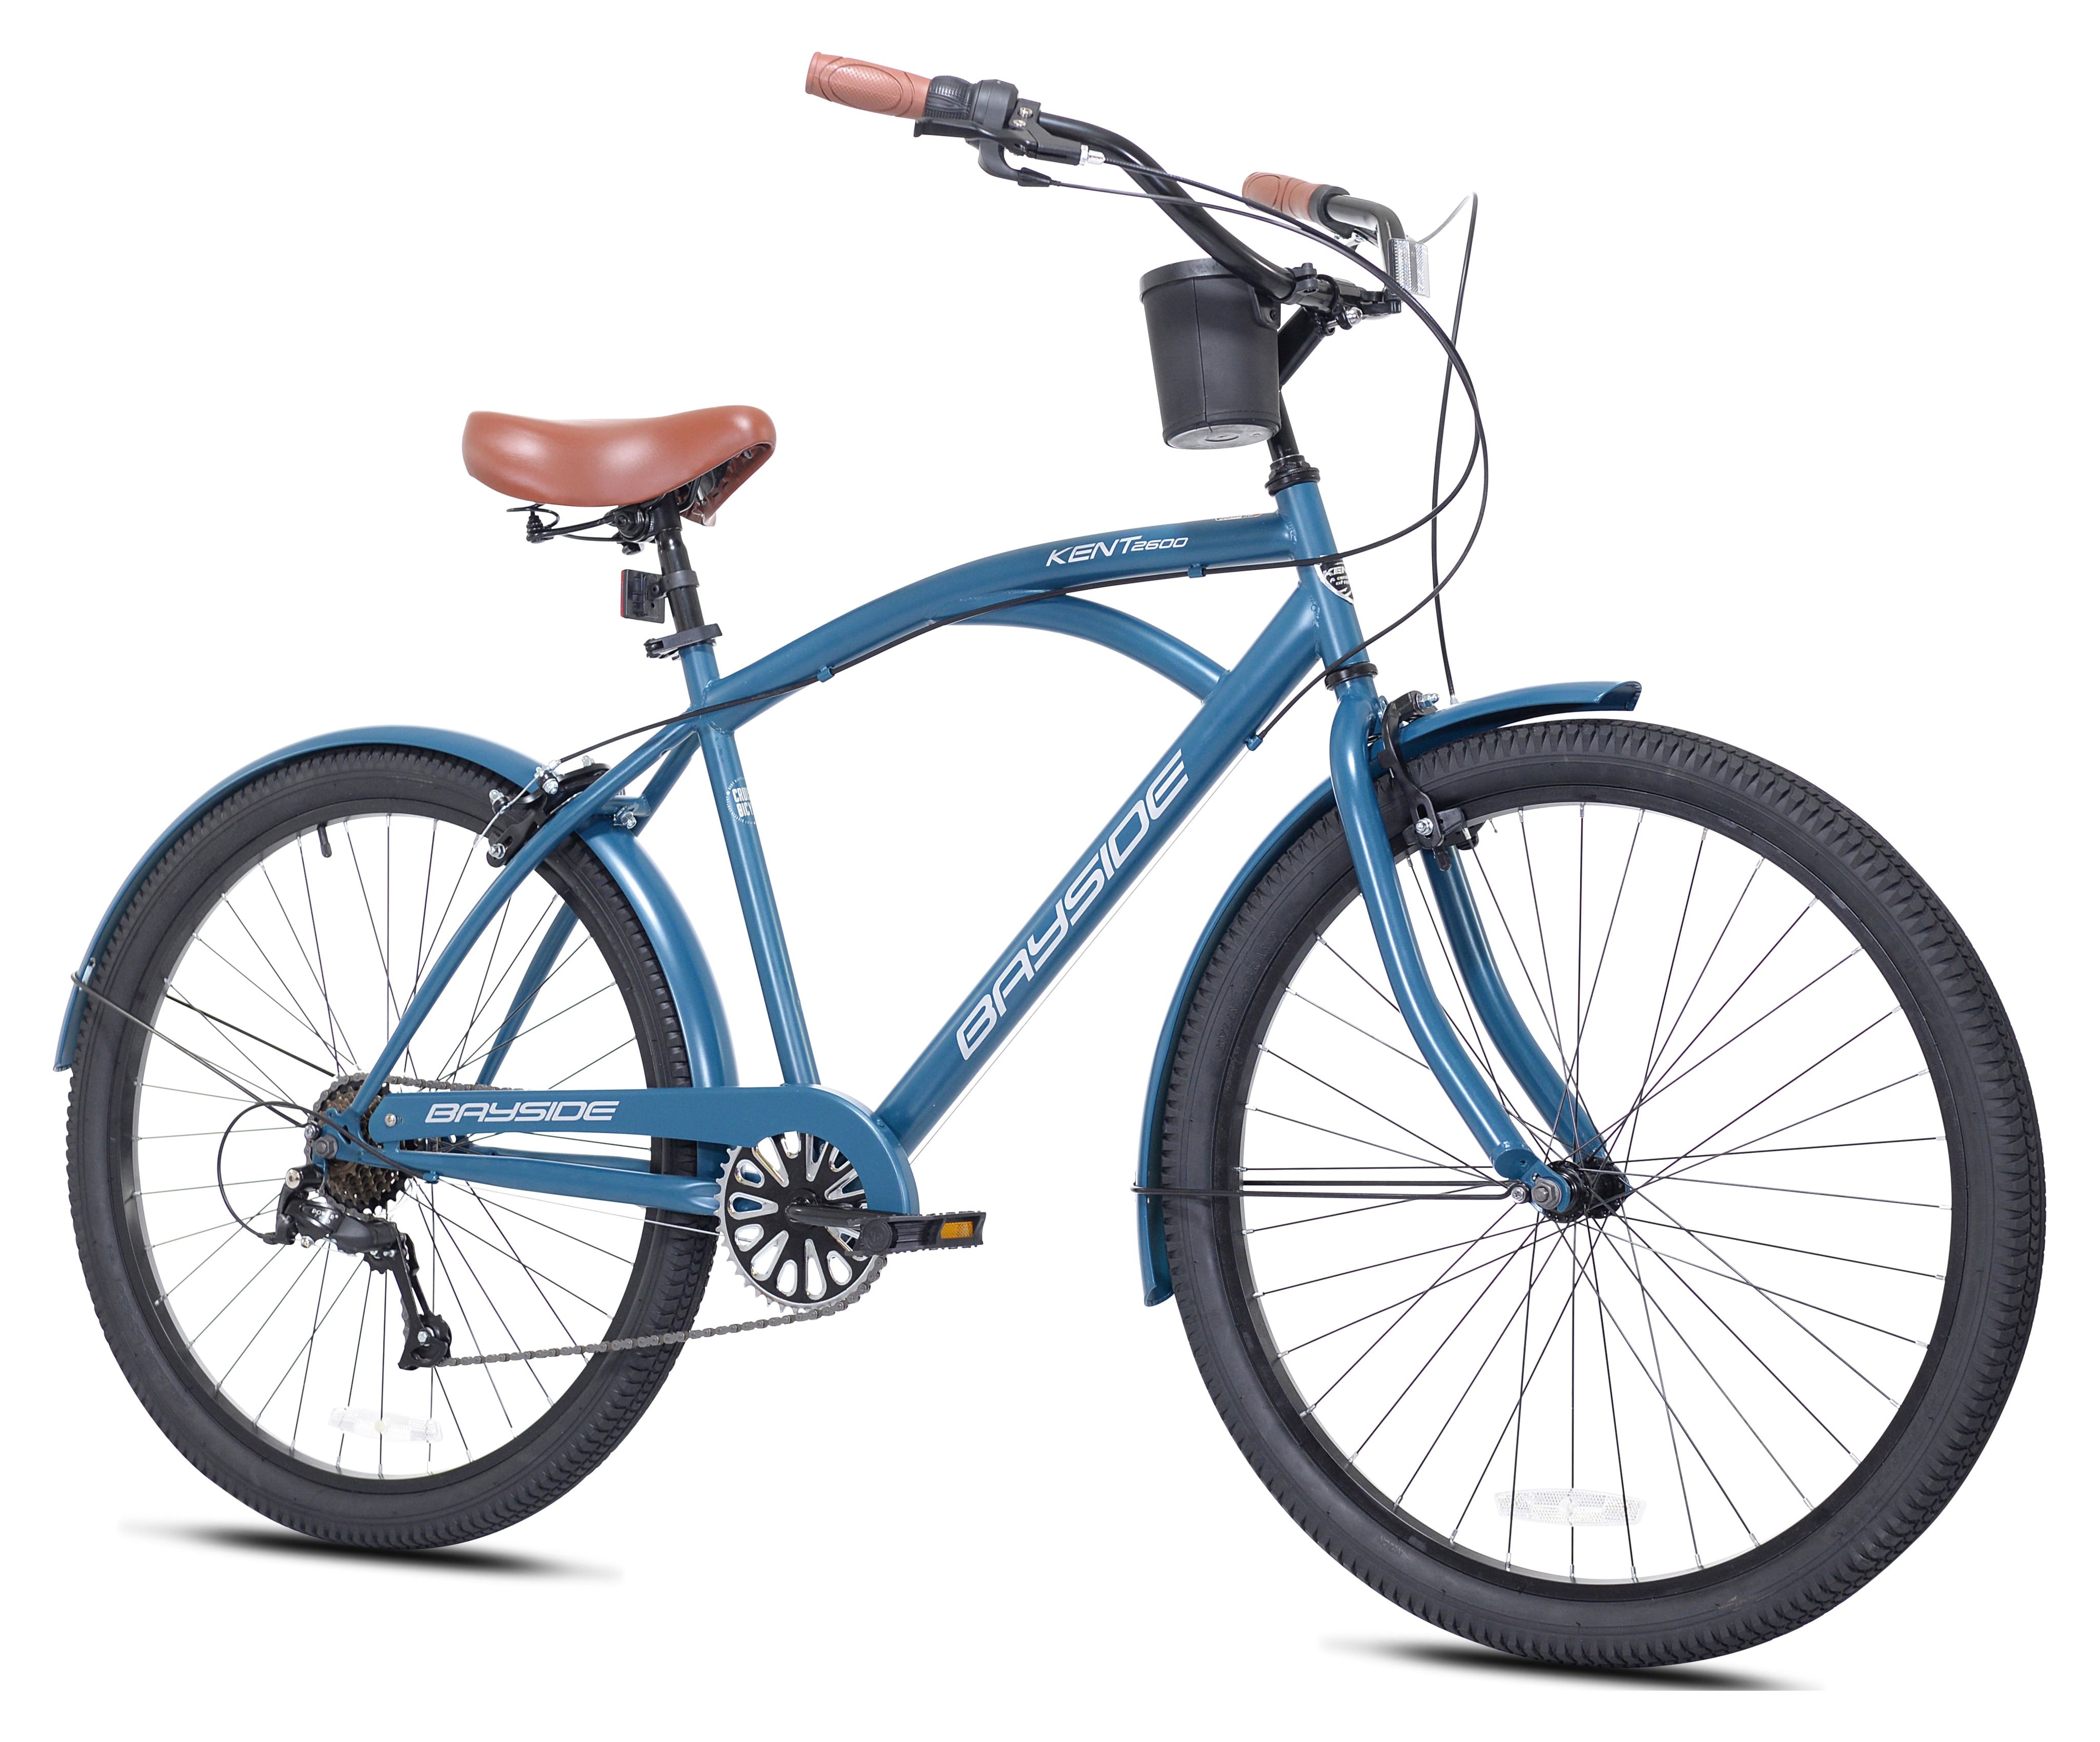 Kent Bicycle 26-inch Bayside Men's Cruiser Bicycle, Blue - image 4 of 8